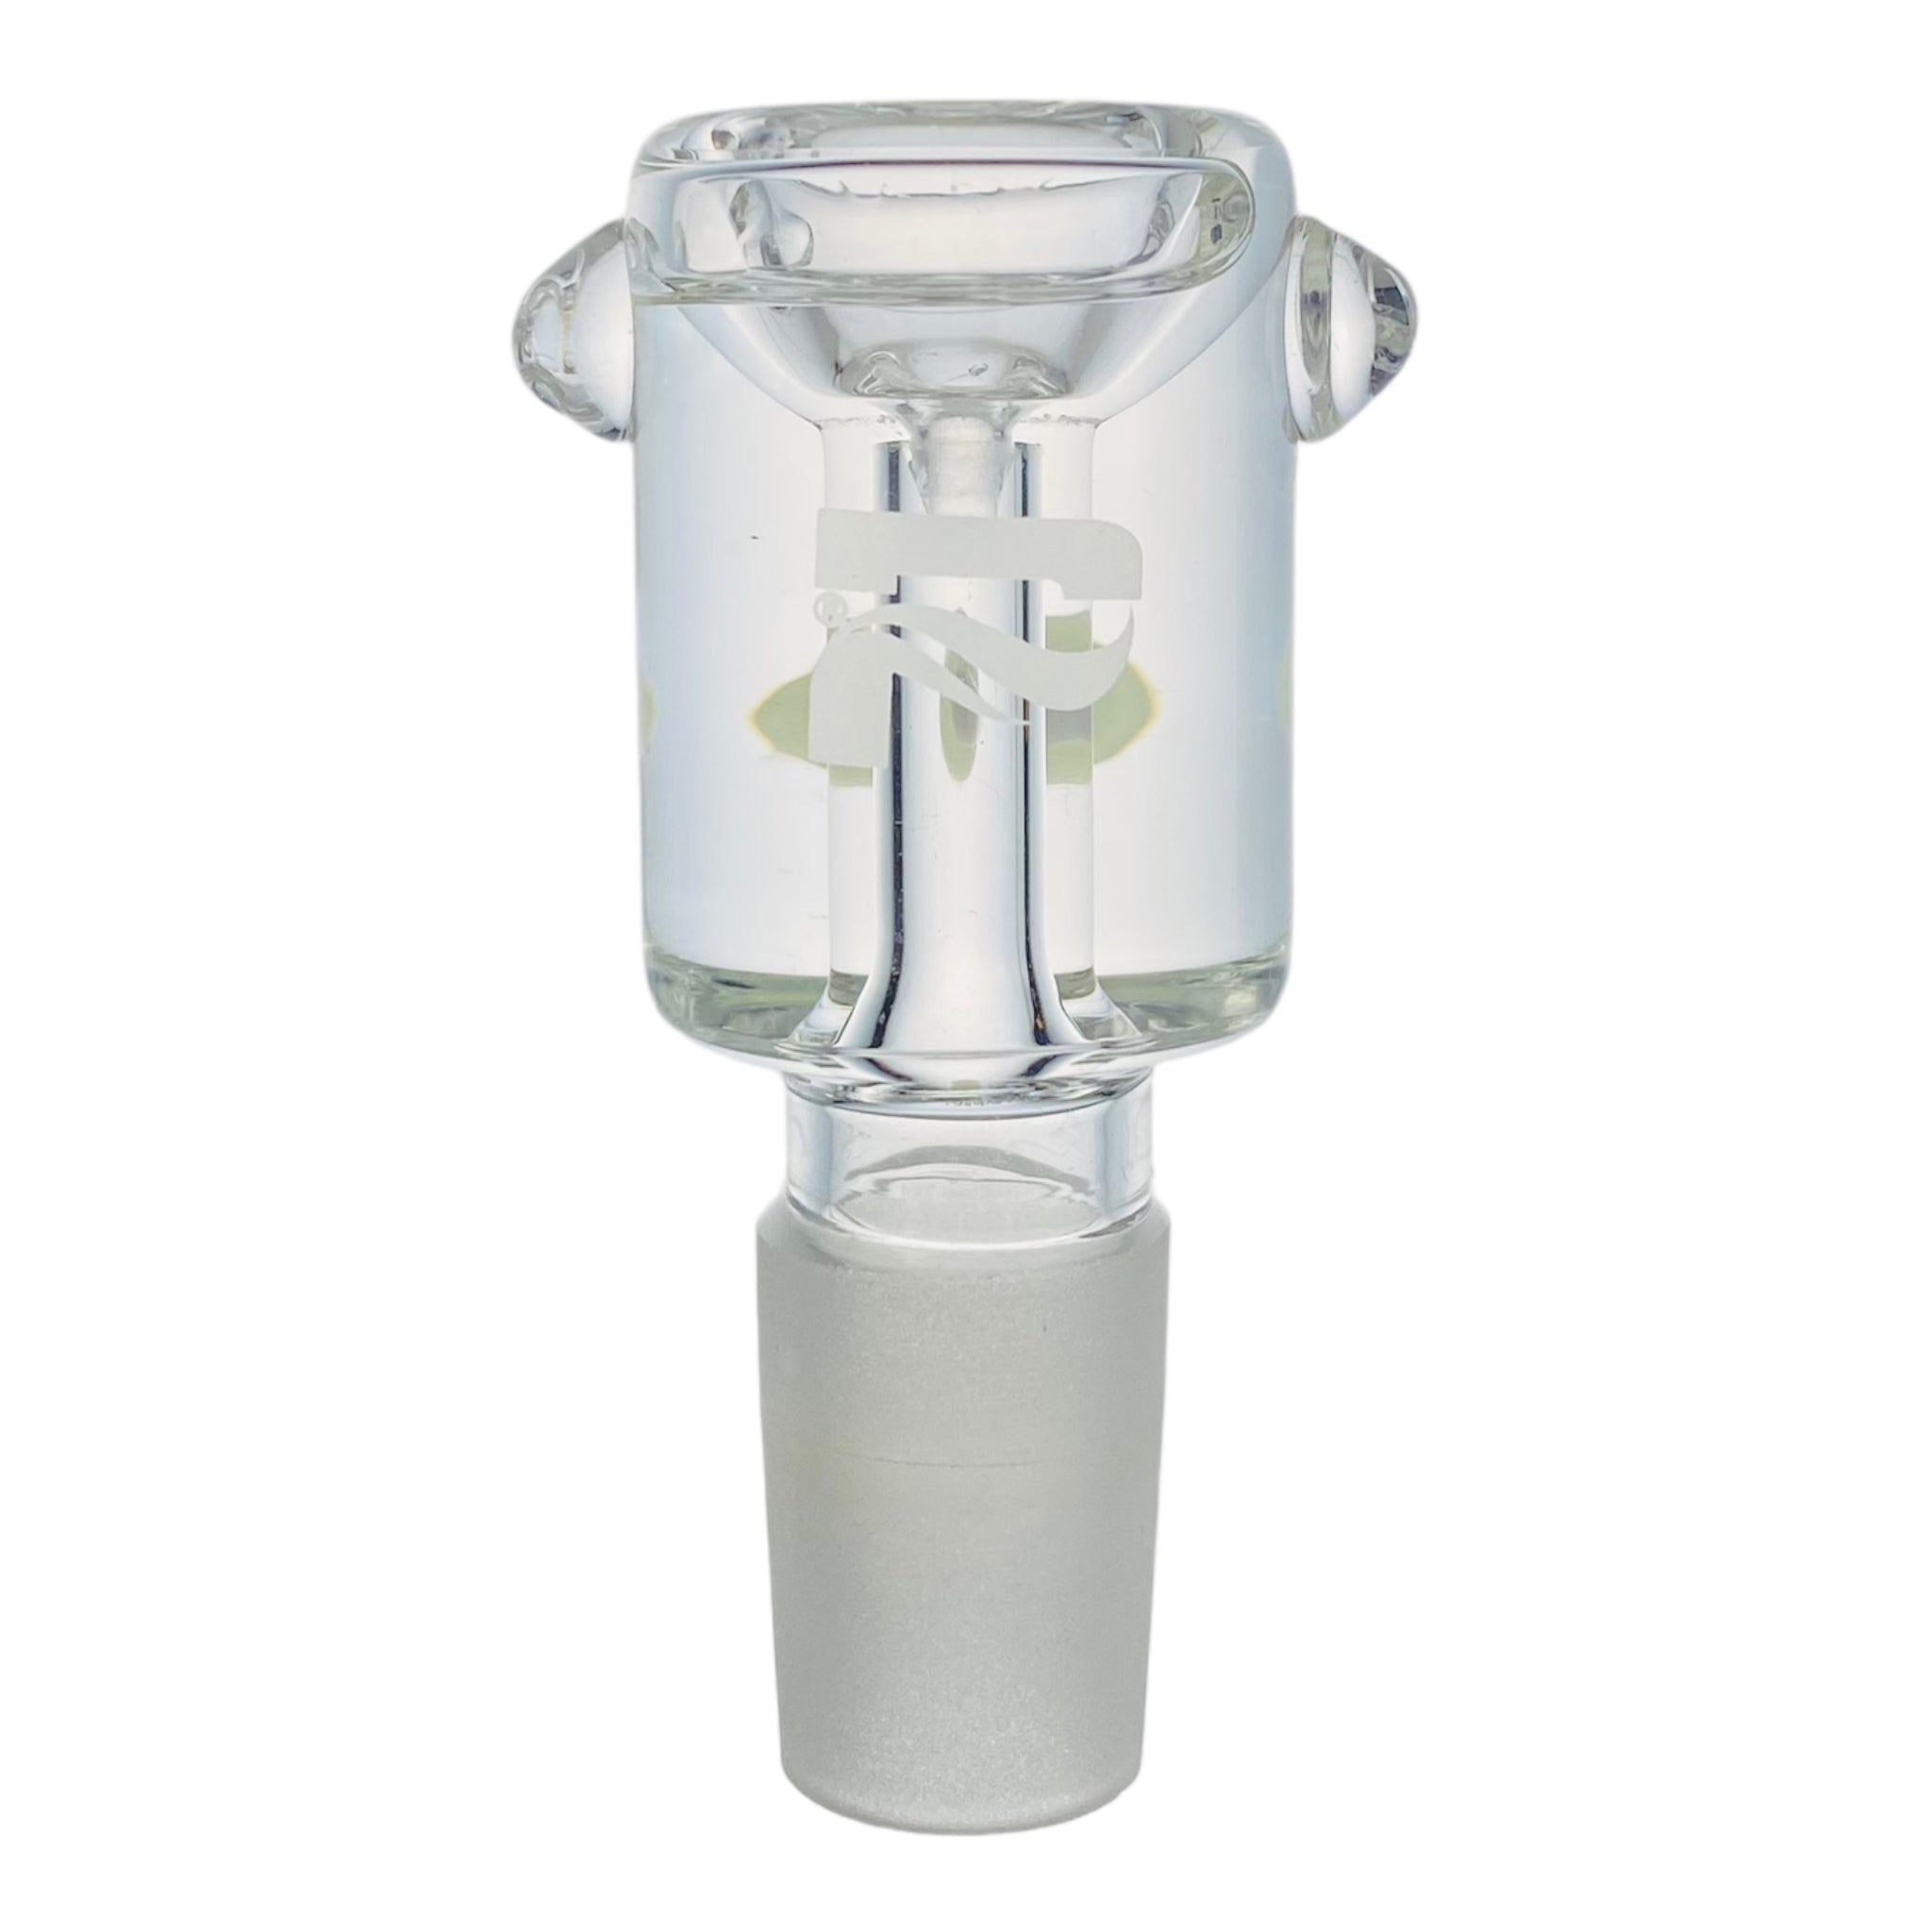 Pulsar Glass - 18mm Flower Bowl - Glycerin Chamber Bong Bowl Piece - Clear